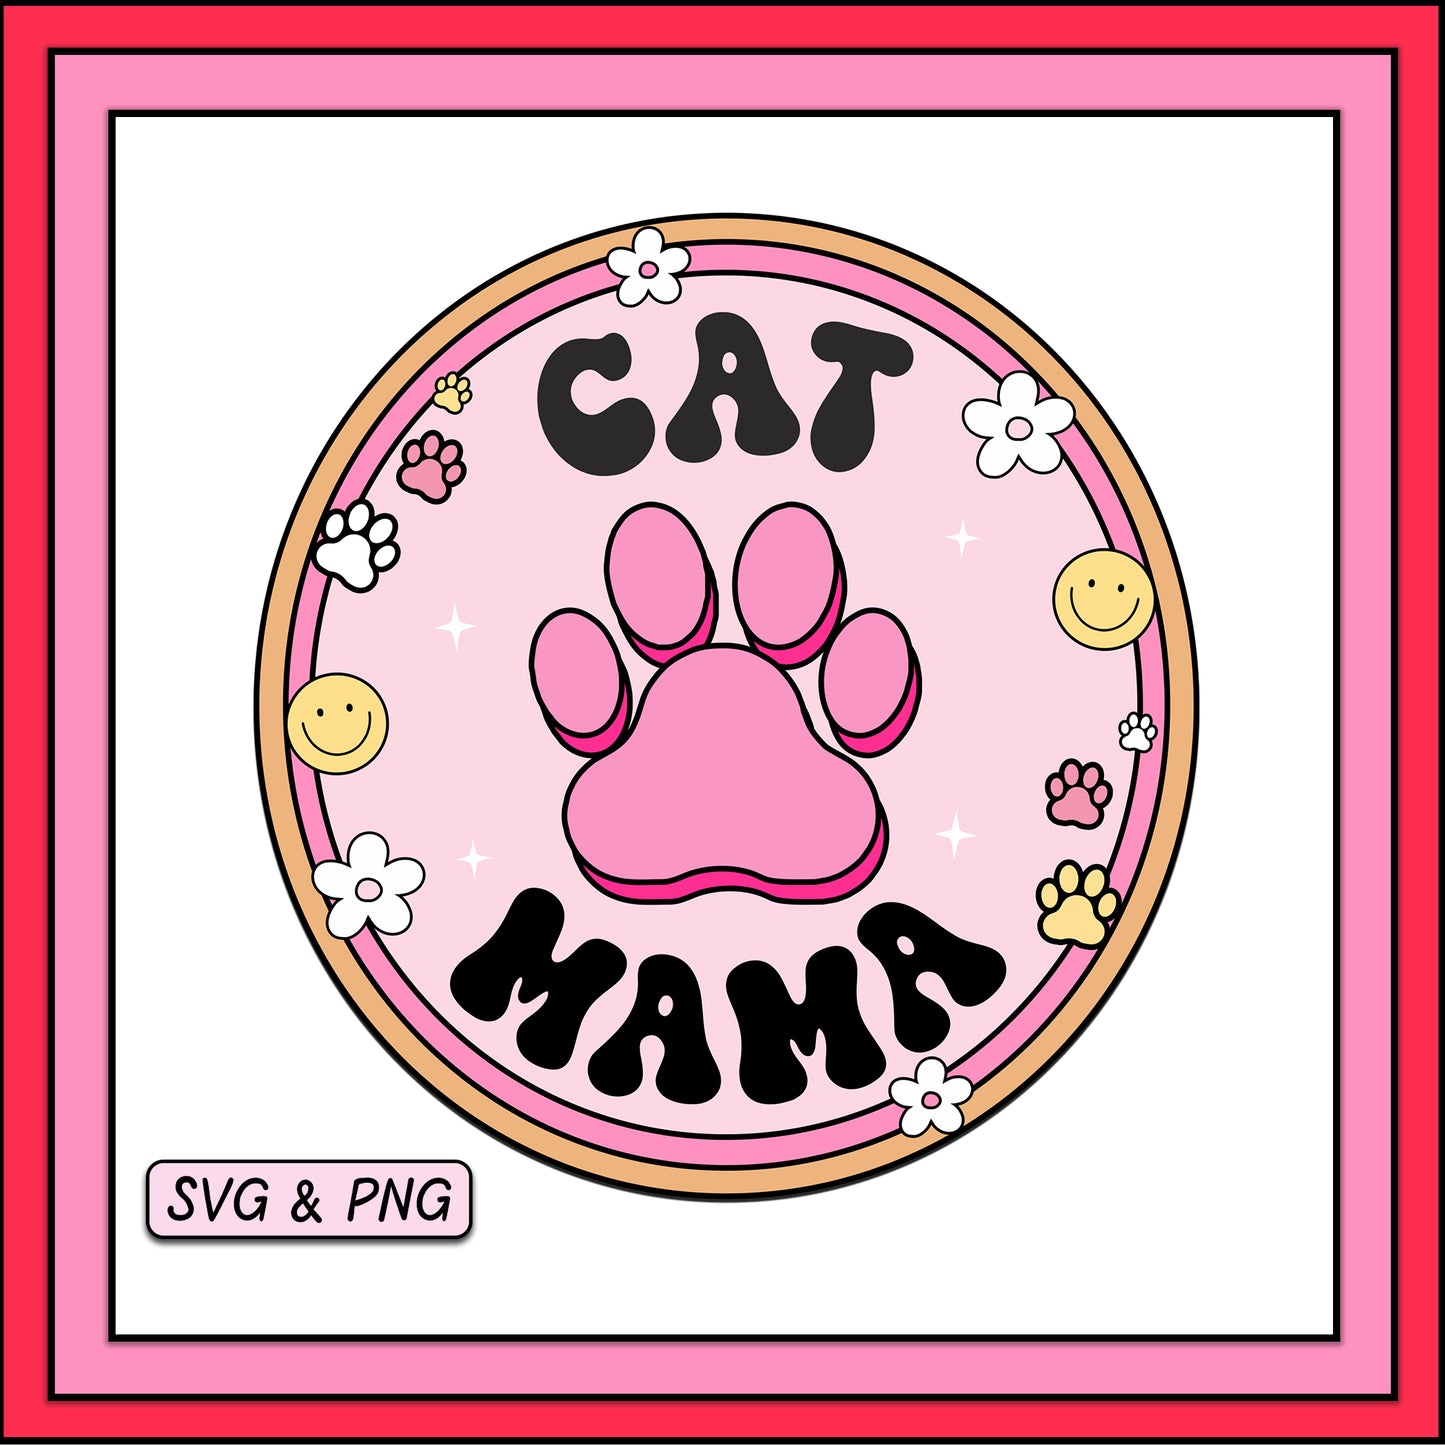 Cat Mama - SVG & PNG